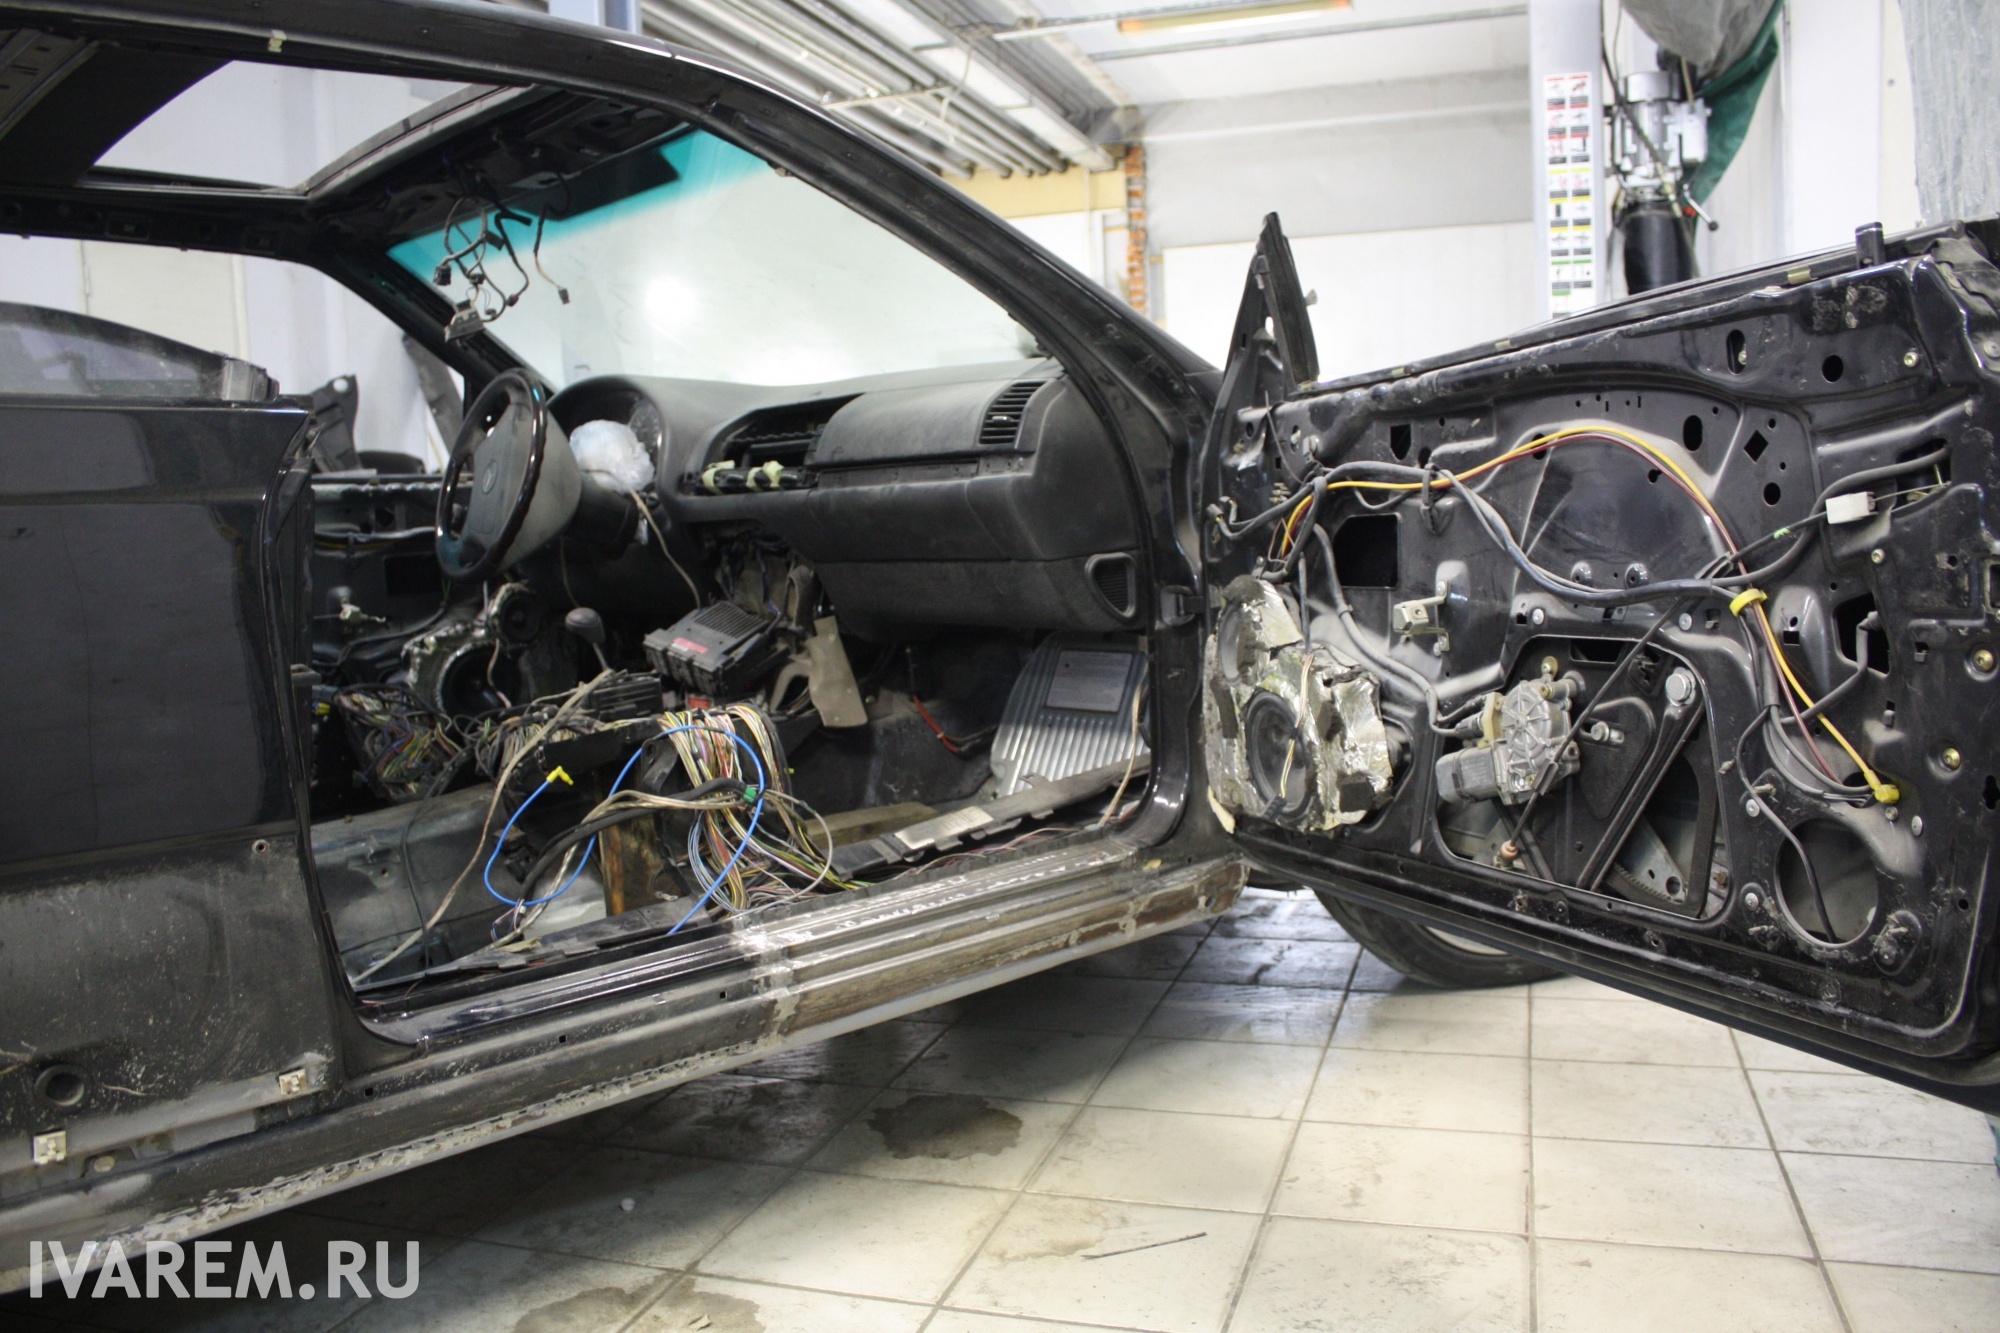 Mercedes Benz W140 Coupe полная реставрация кузова и салона. mercedes, mercedes-benz, w140, авто, ремонт кузова, ремонт салона